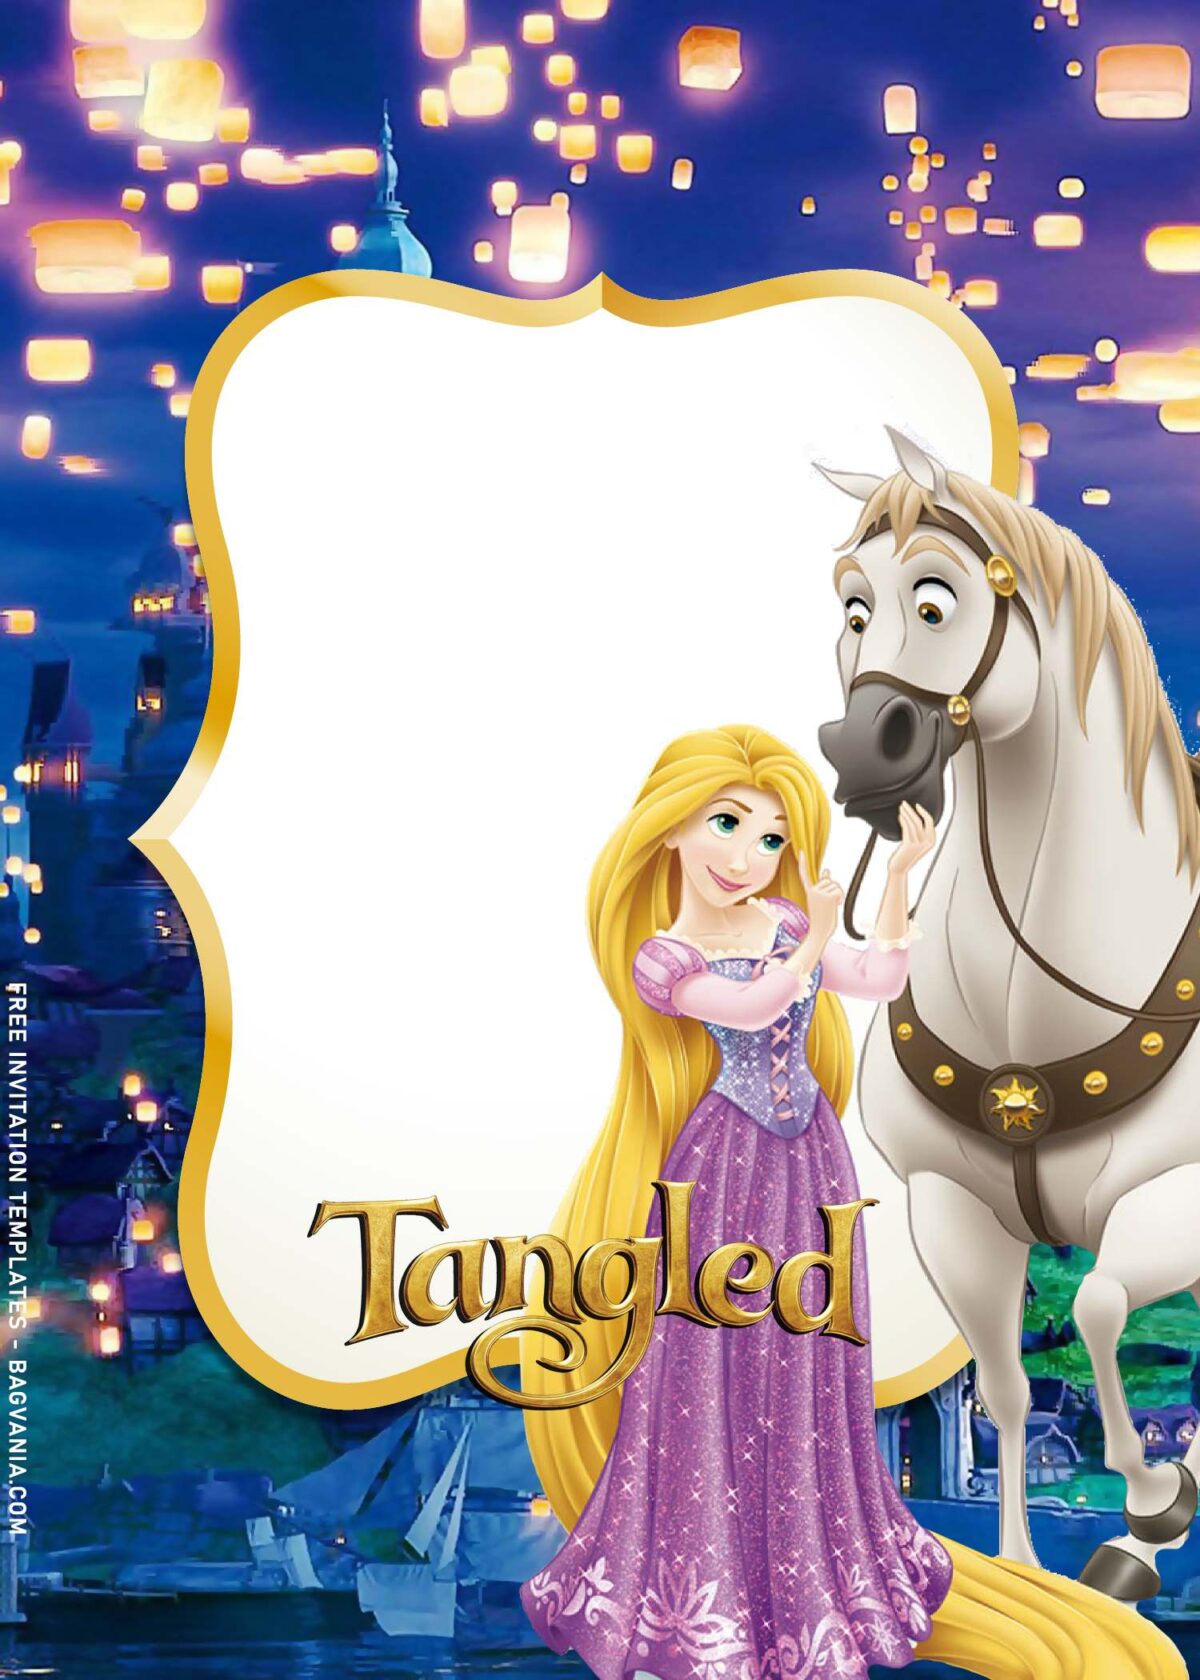 7+ Disney Tangled Rapunzel Birthday Invitation Templates with Stunning Thousand Lantern scene